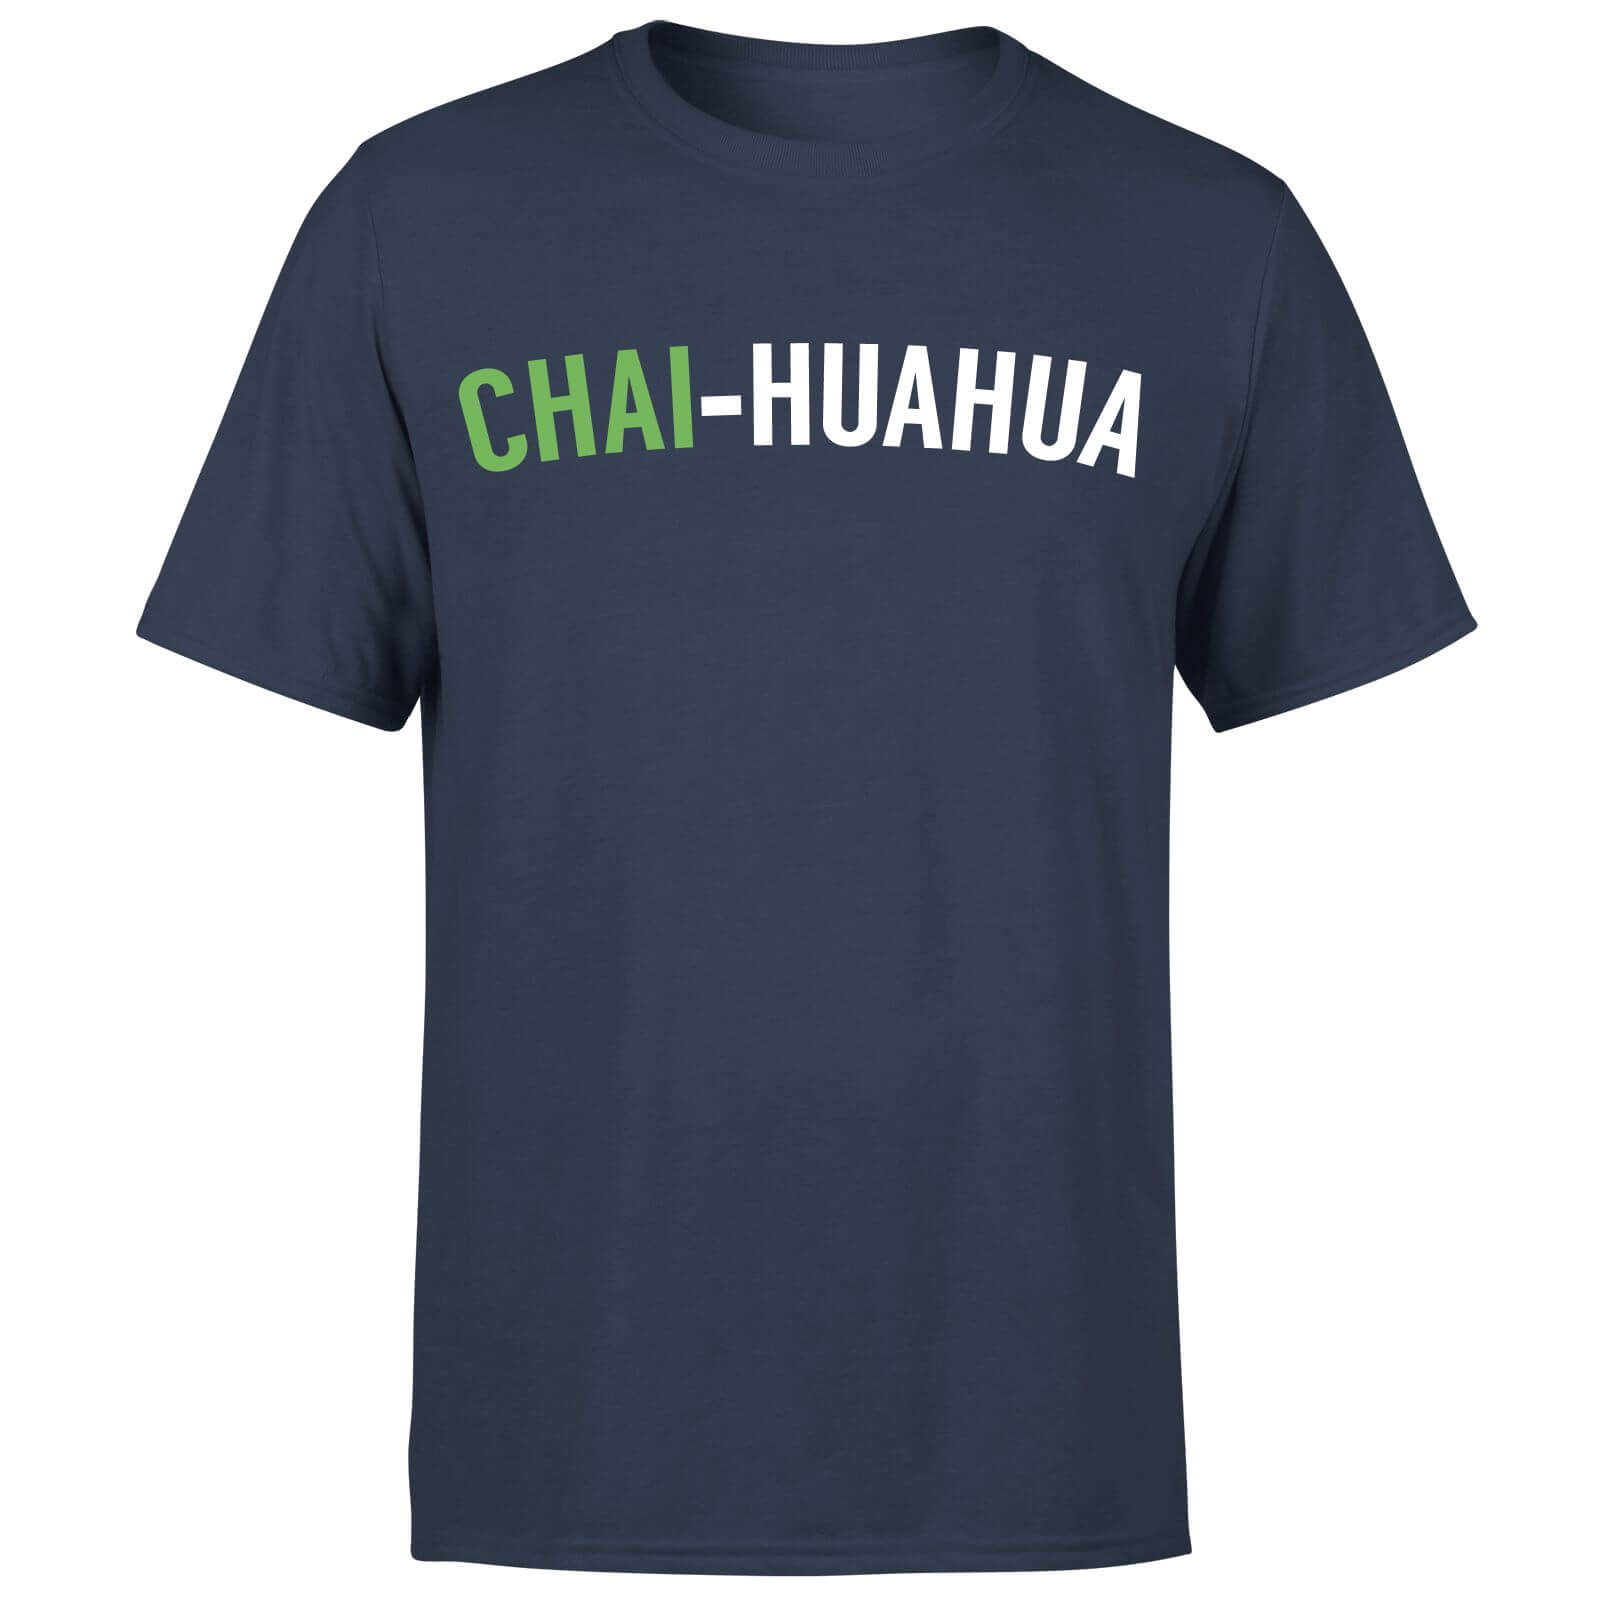 Chai-huahua T-Shirt - Navy - S - Navy